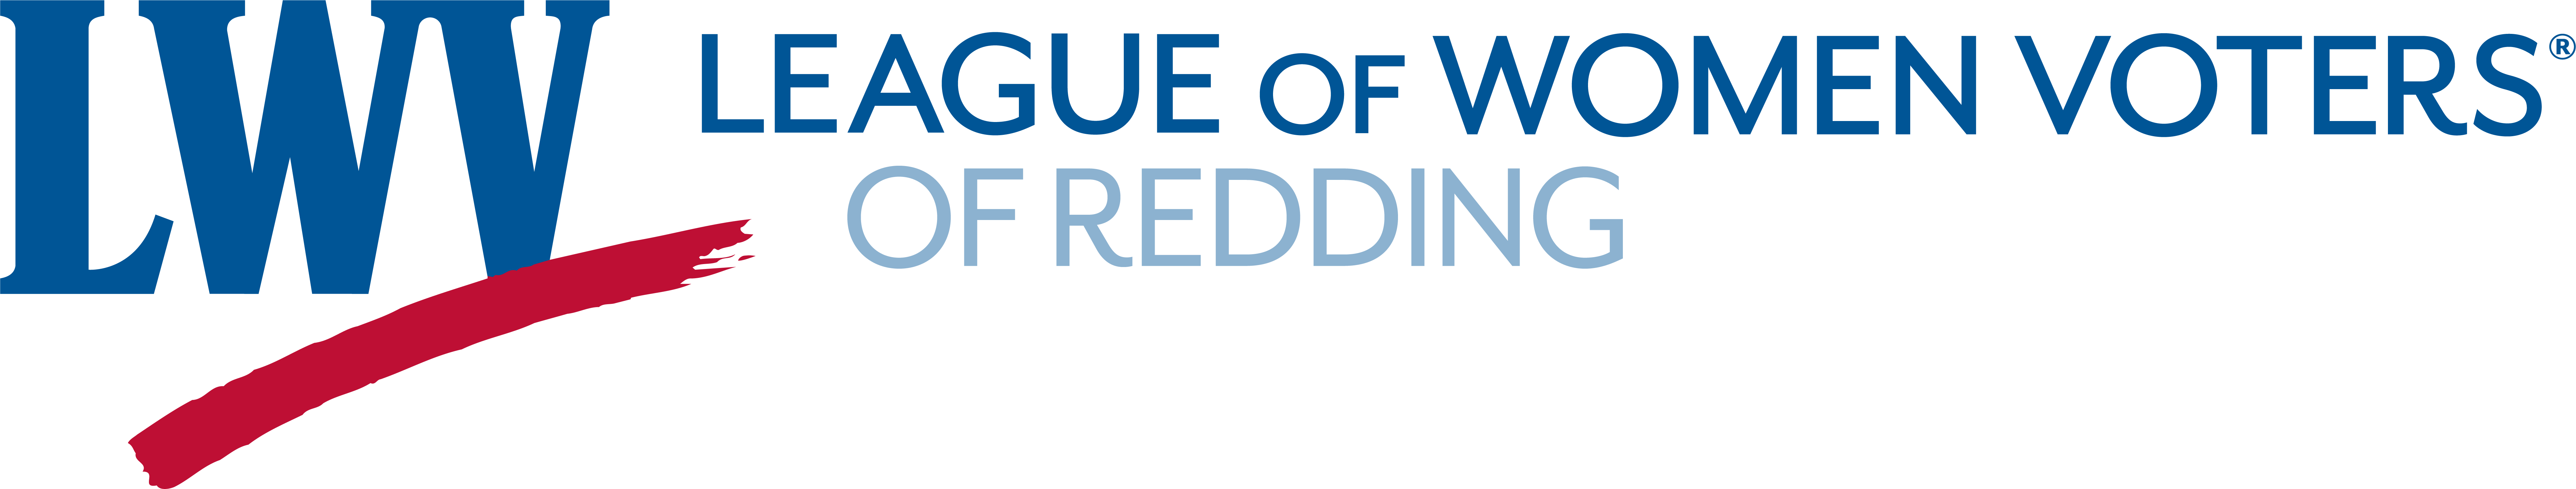 League of Women Voters of Redding Connecticut logo